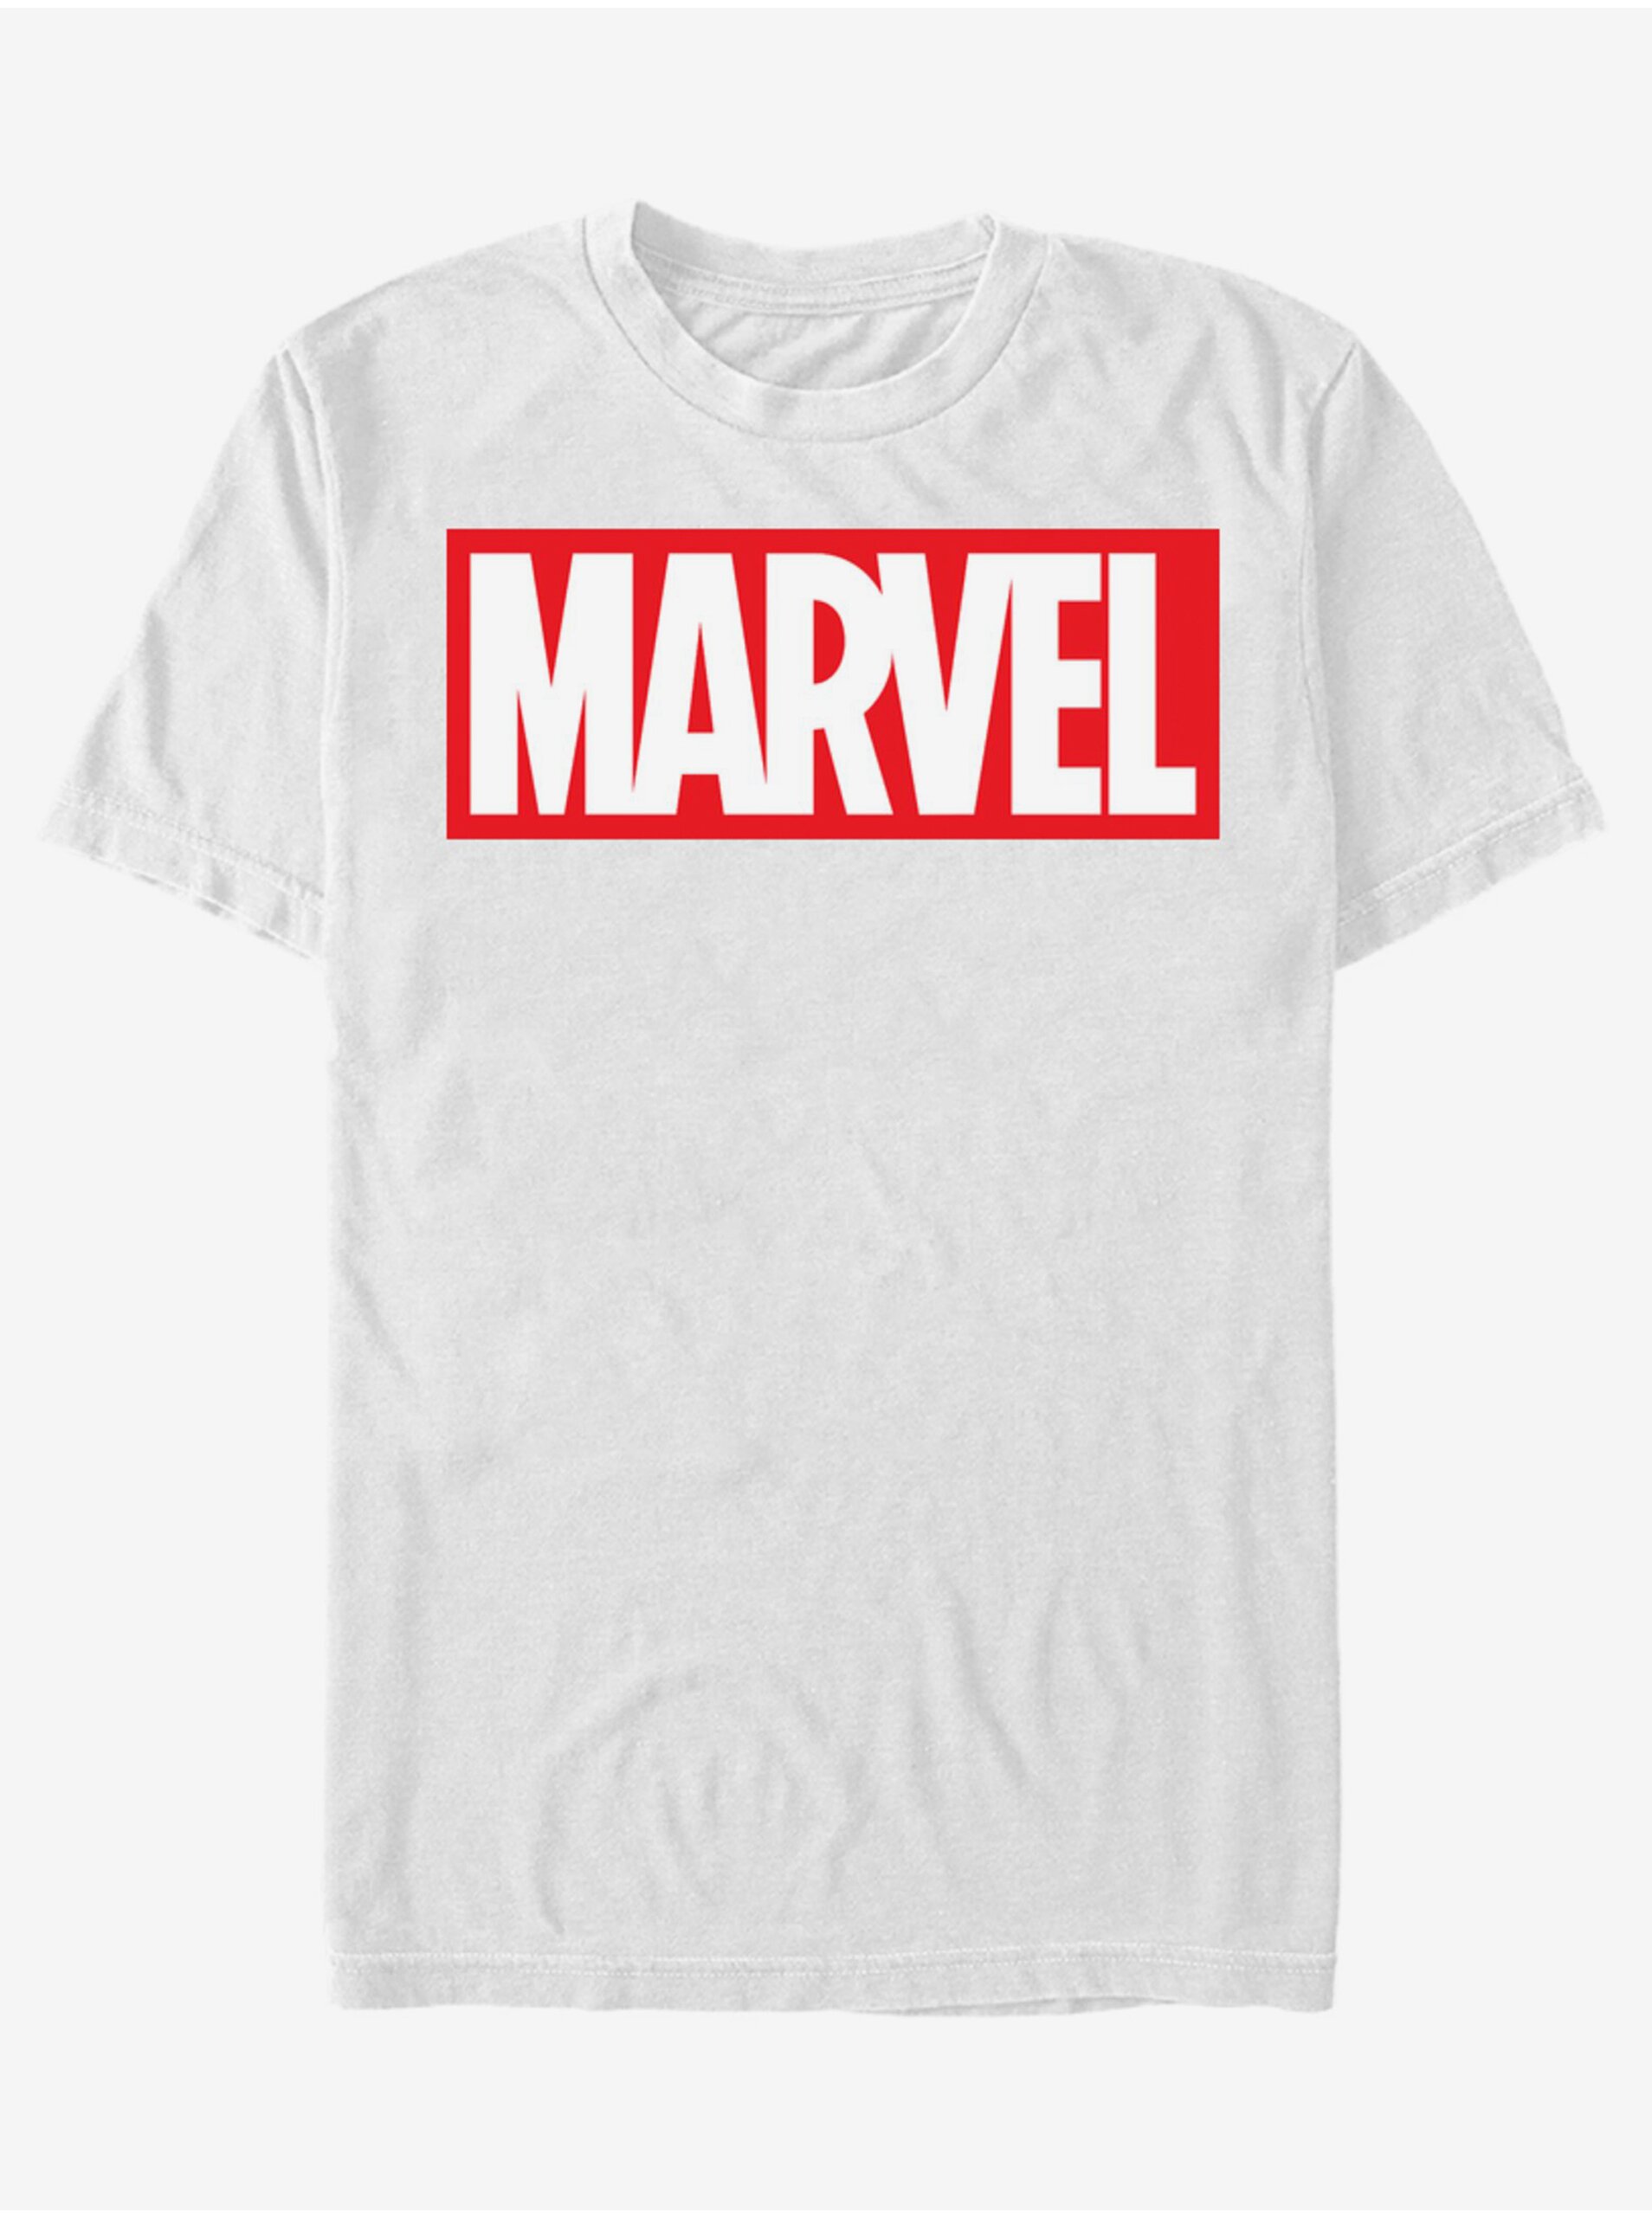 Lacno Biele unisex tričko ZOOT.Fan Marvel Marvel Brick